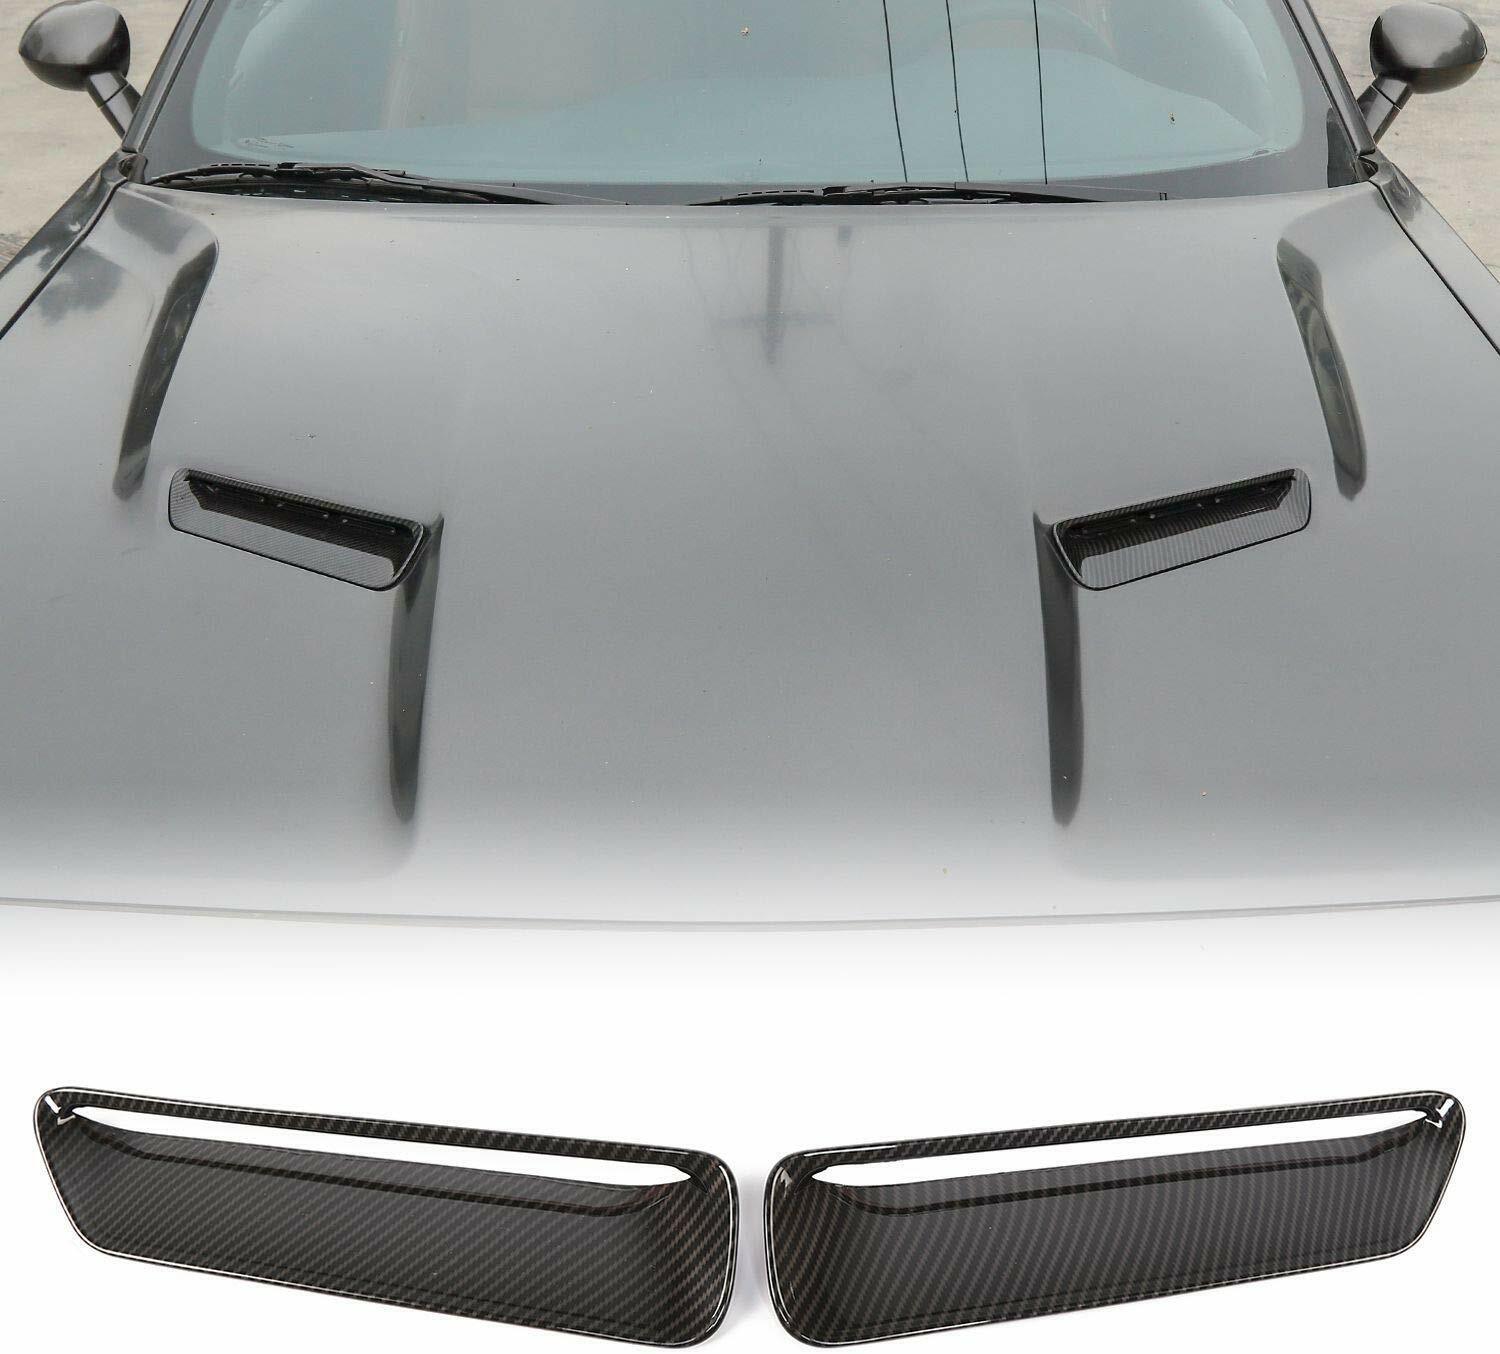 2pcs Hood Scoop Air Vent Cover Trim for Dodge Challenger 2015+ Carbon Fiber